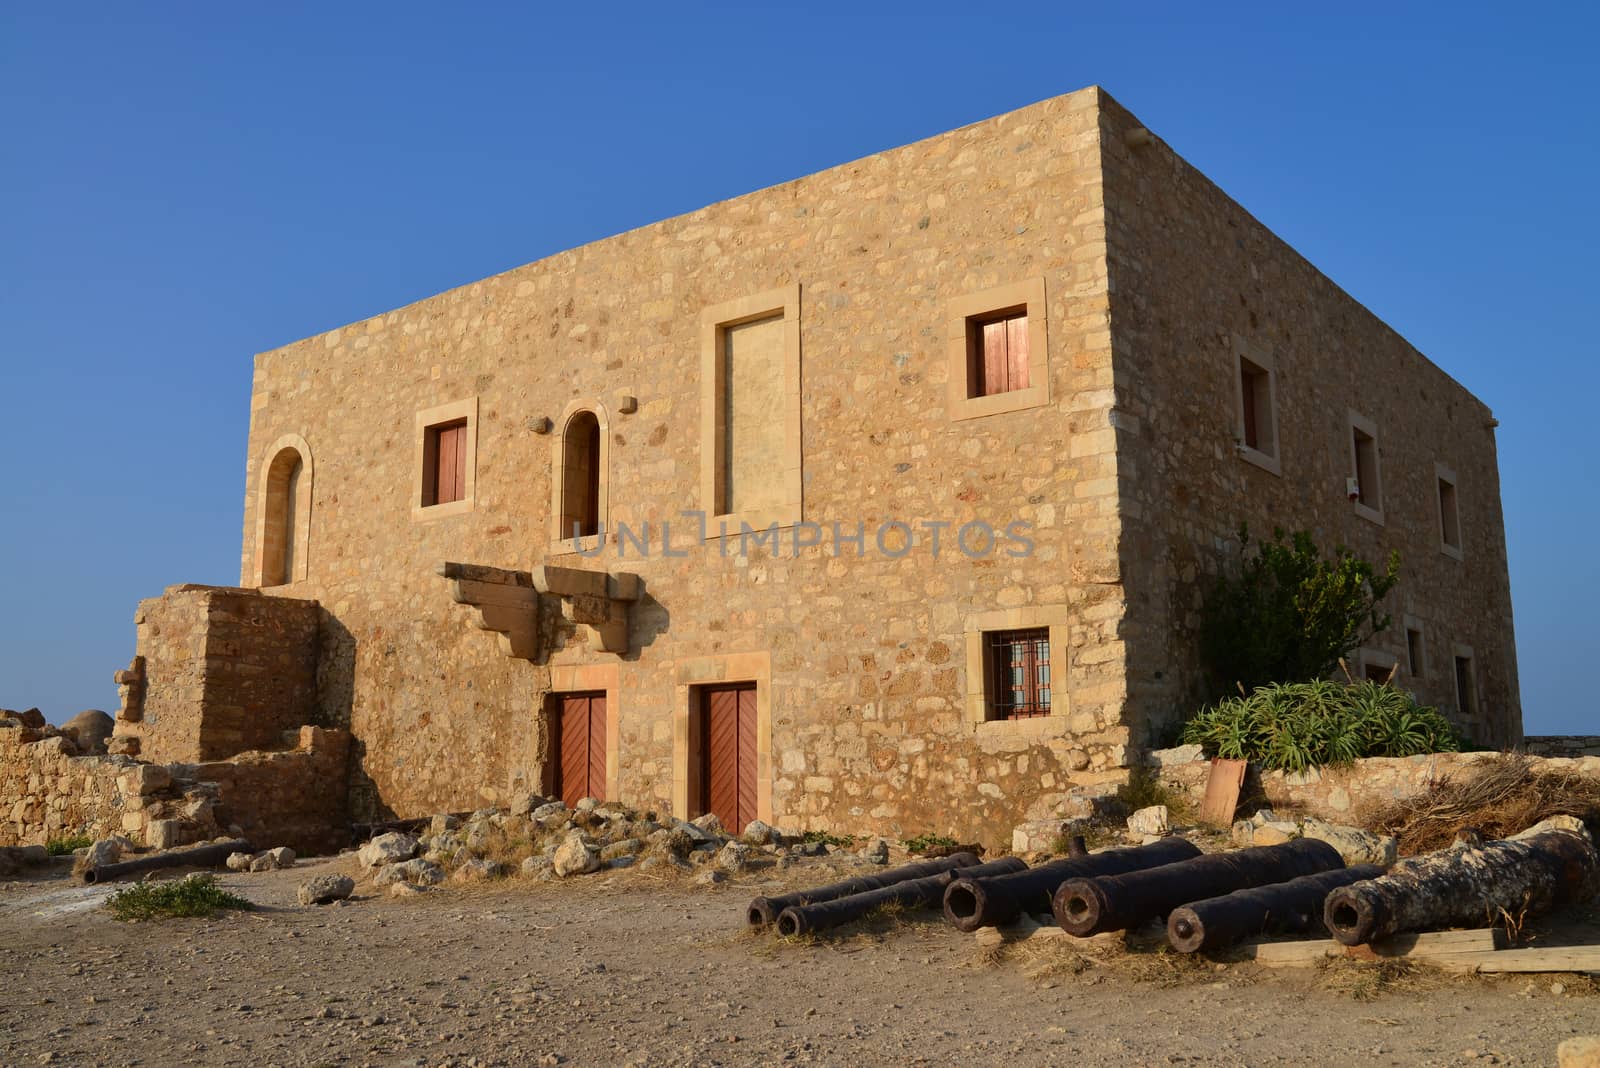 Rethymno Fortezza fortress armory by tony4urban